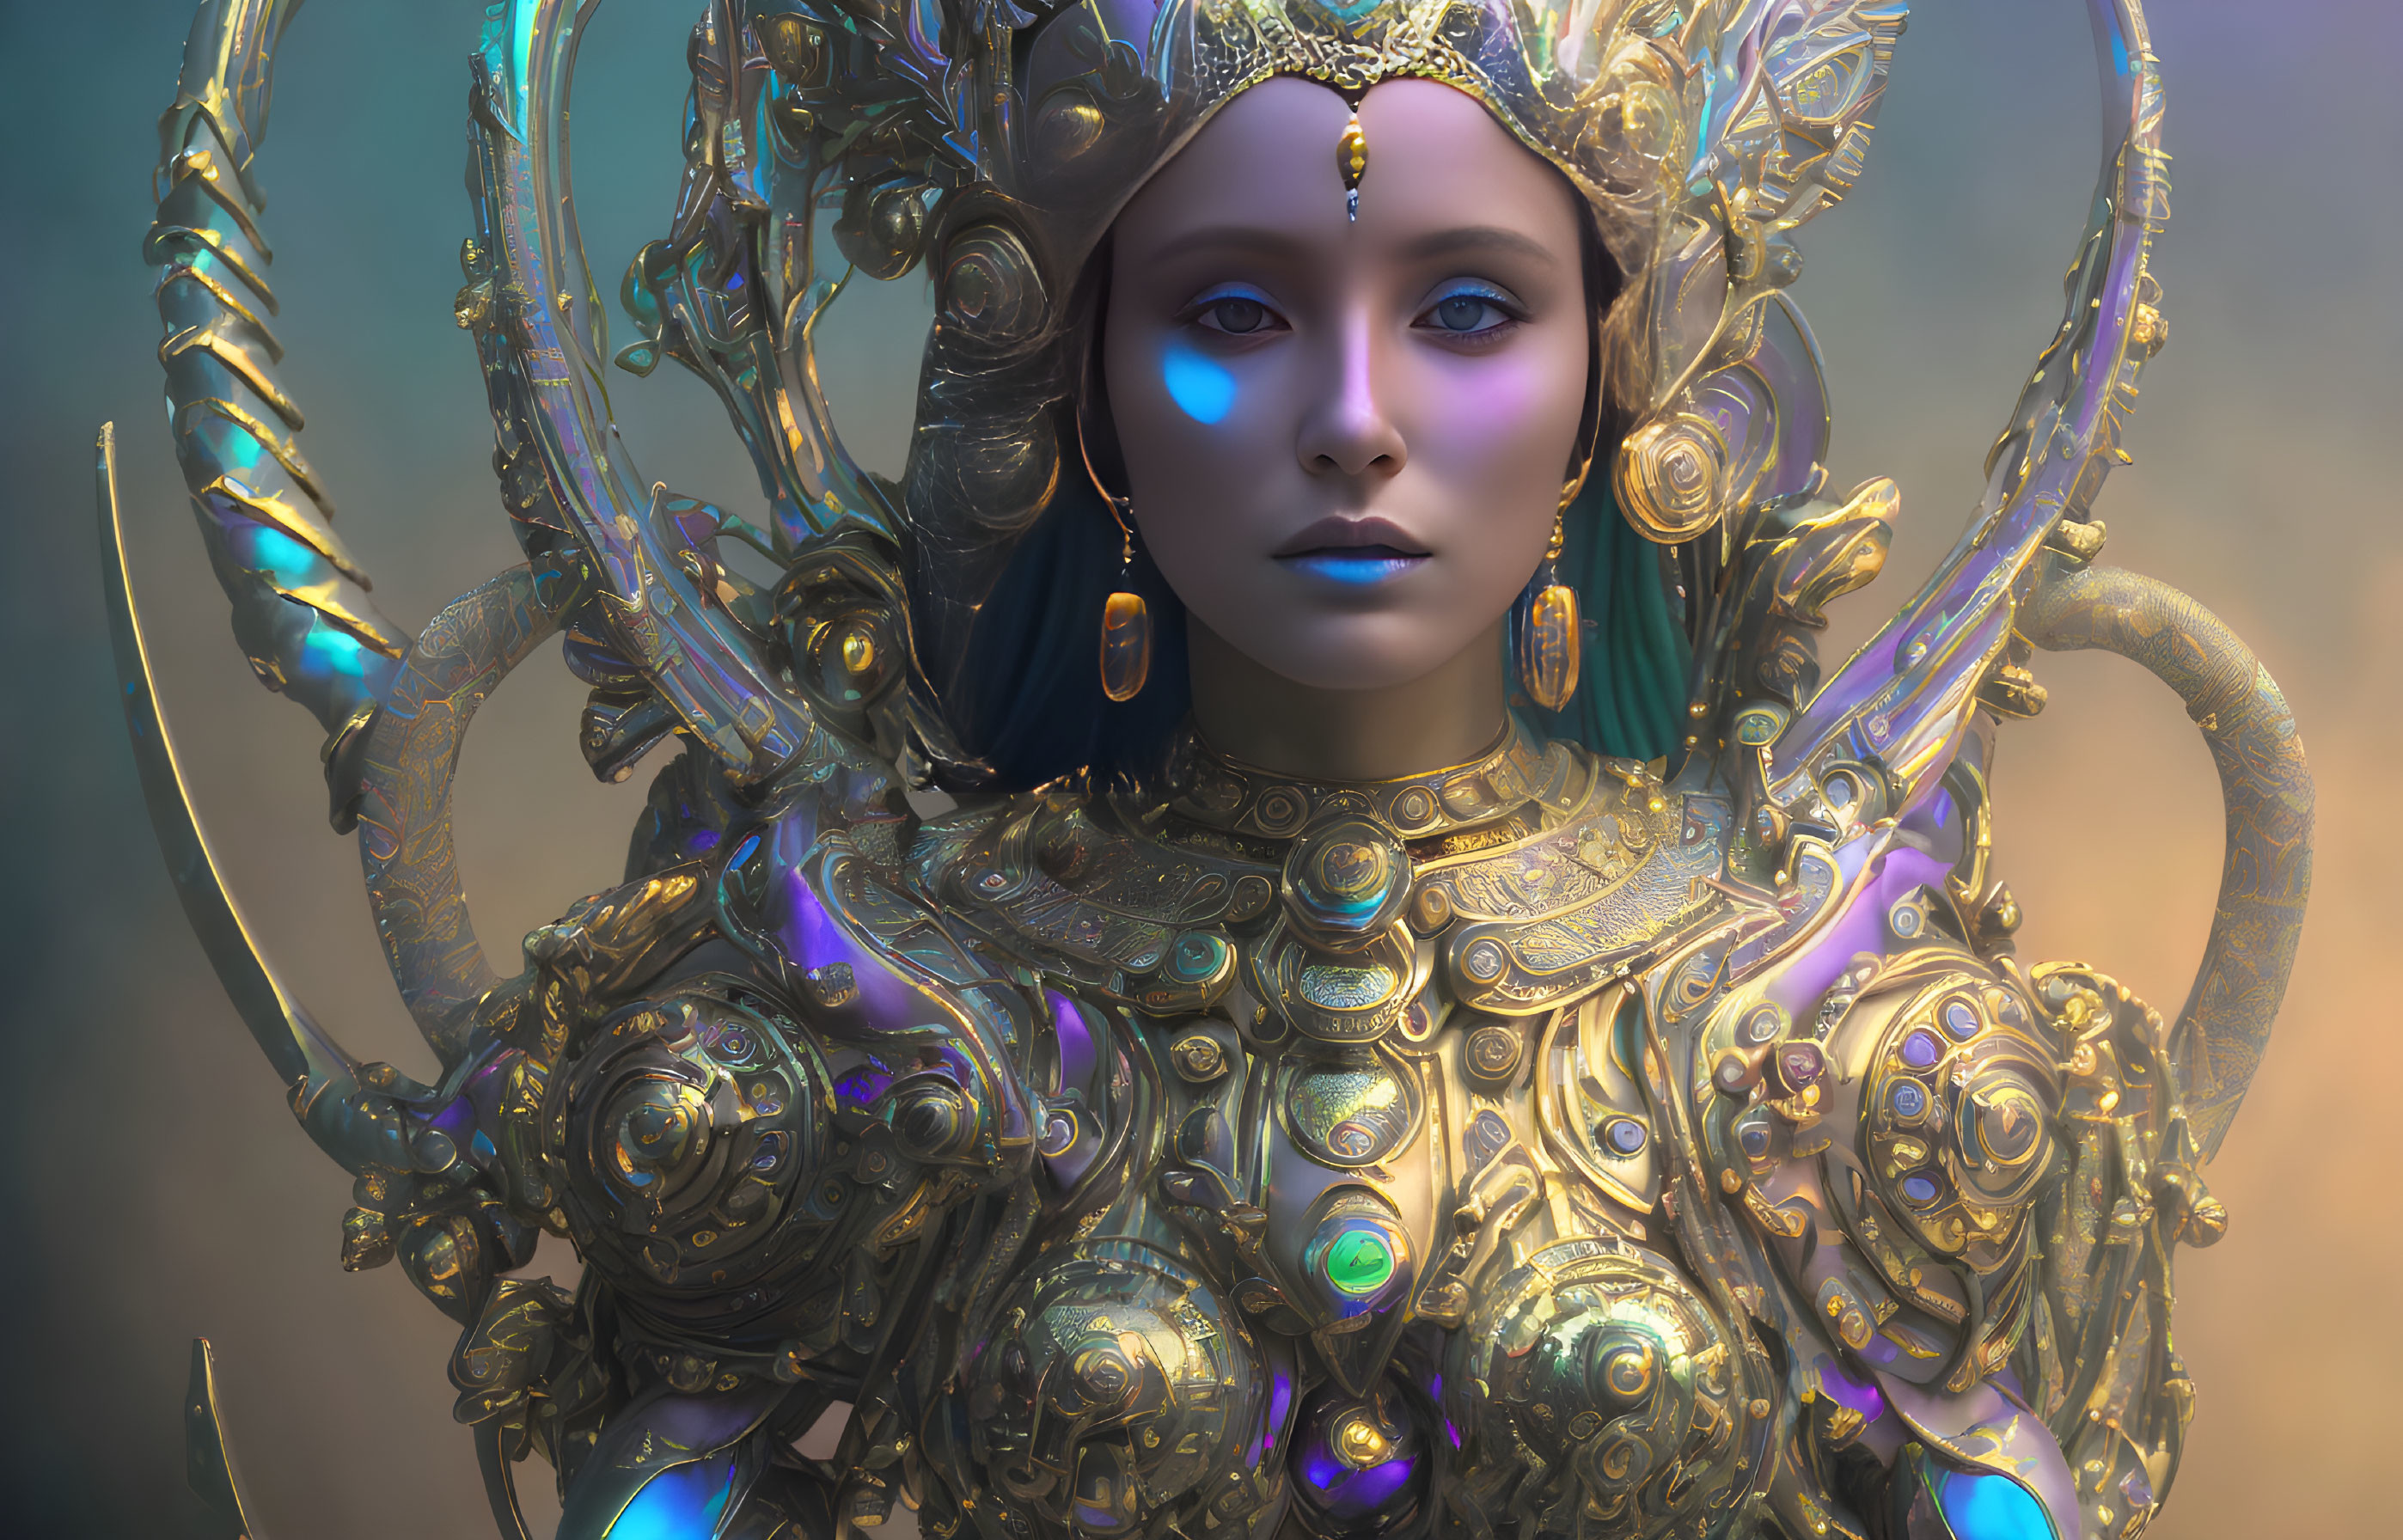 Digital Artwork: Woman in Ornate Gold Armor and Headdress